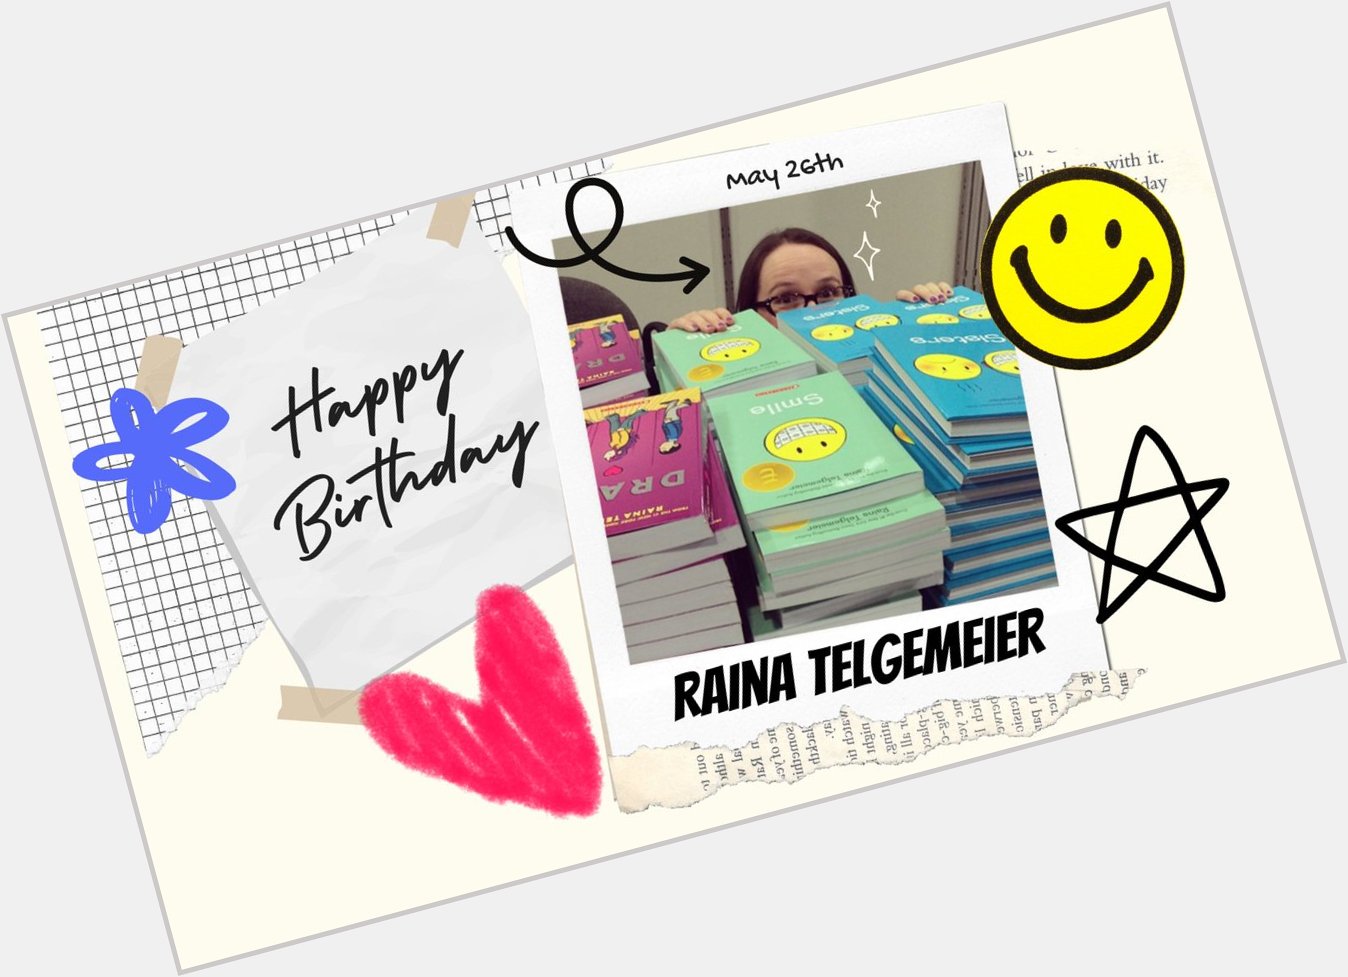 Happy birthday Raina Telgemeier! Learn more about her work here:  